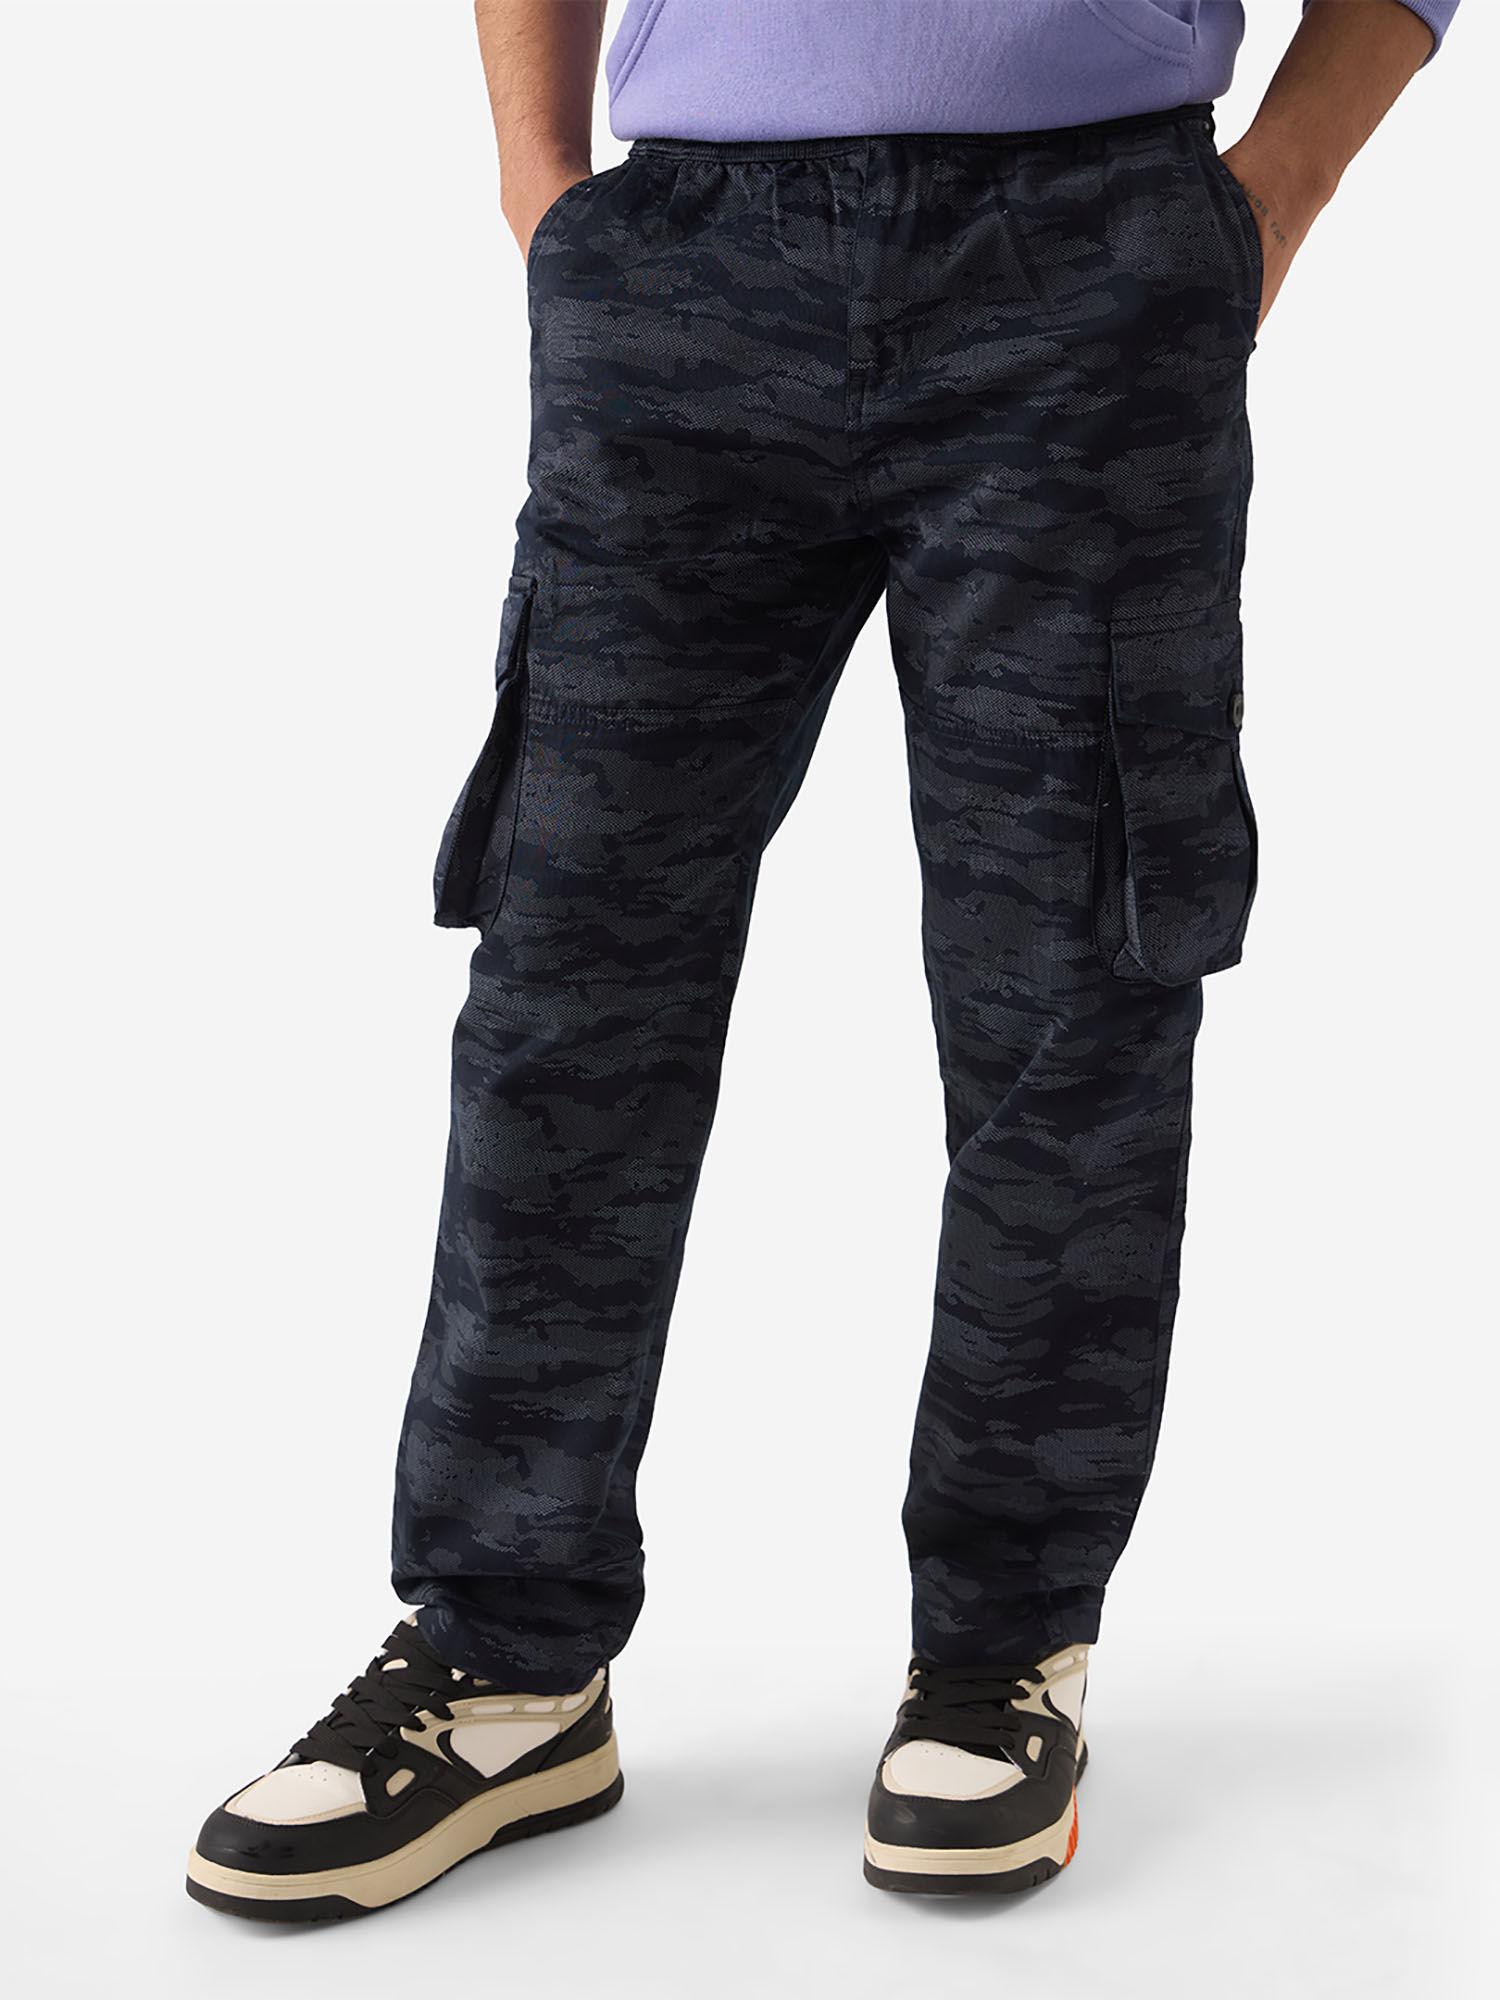 Original Solids : Navy Blue Men Cargo Pants